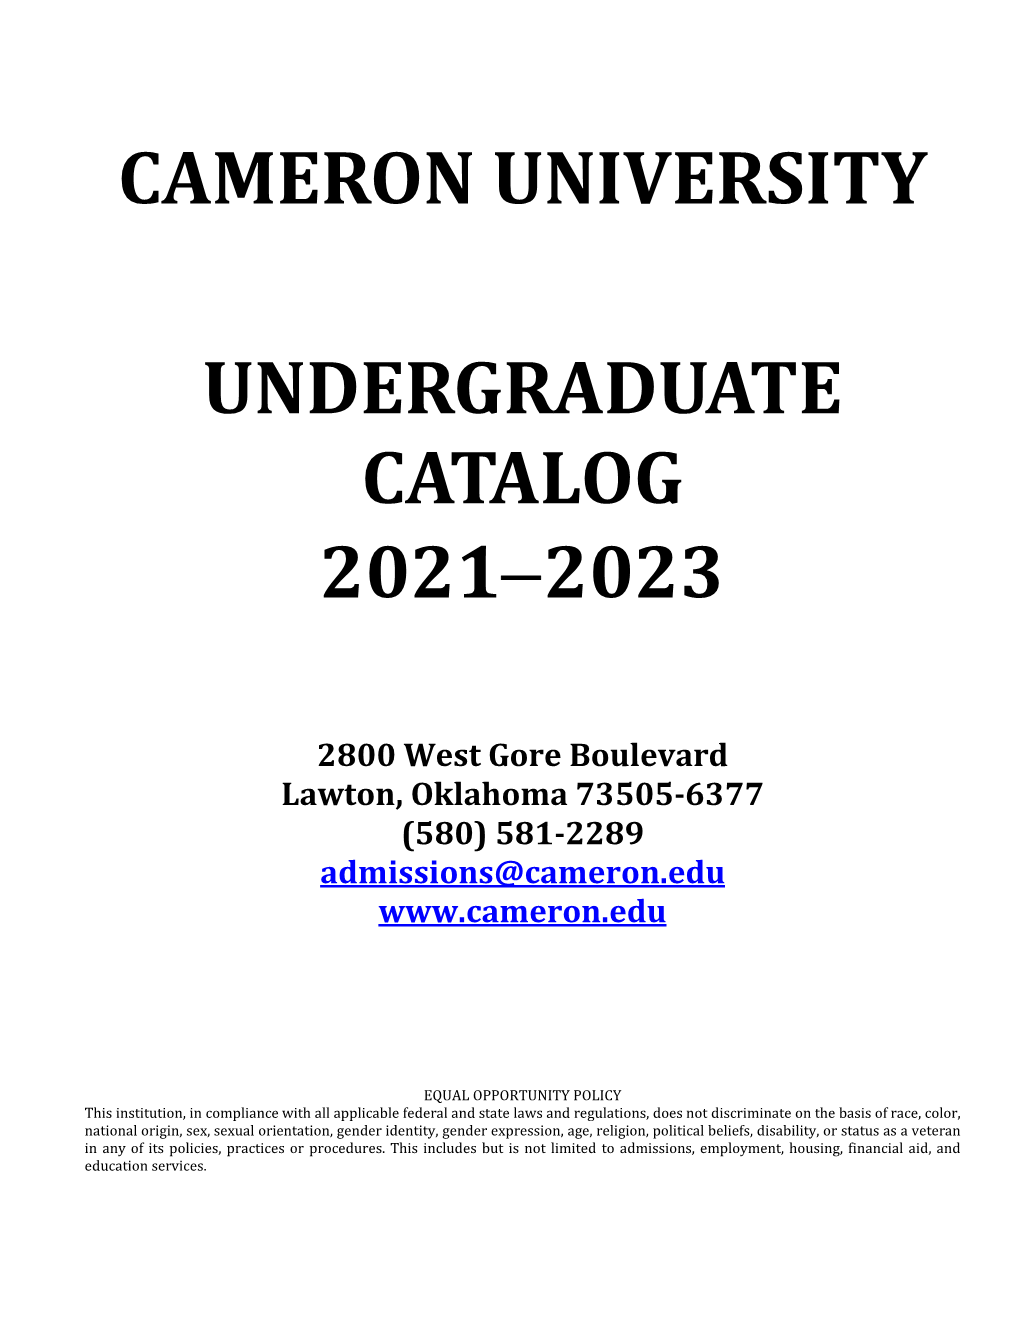 Cameron University Undergraduate Catalog 2021-2023